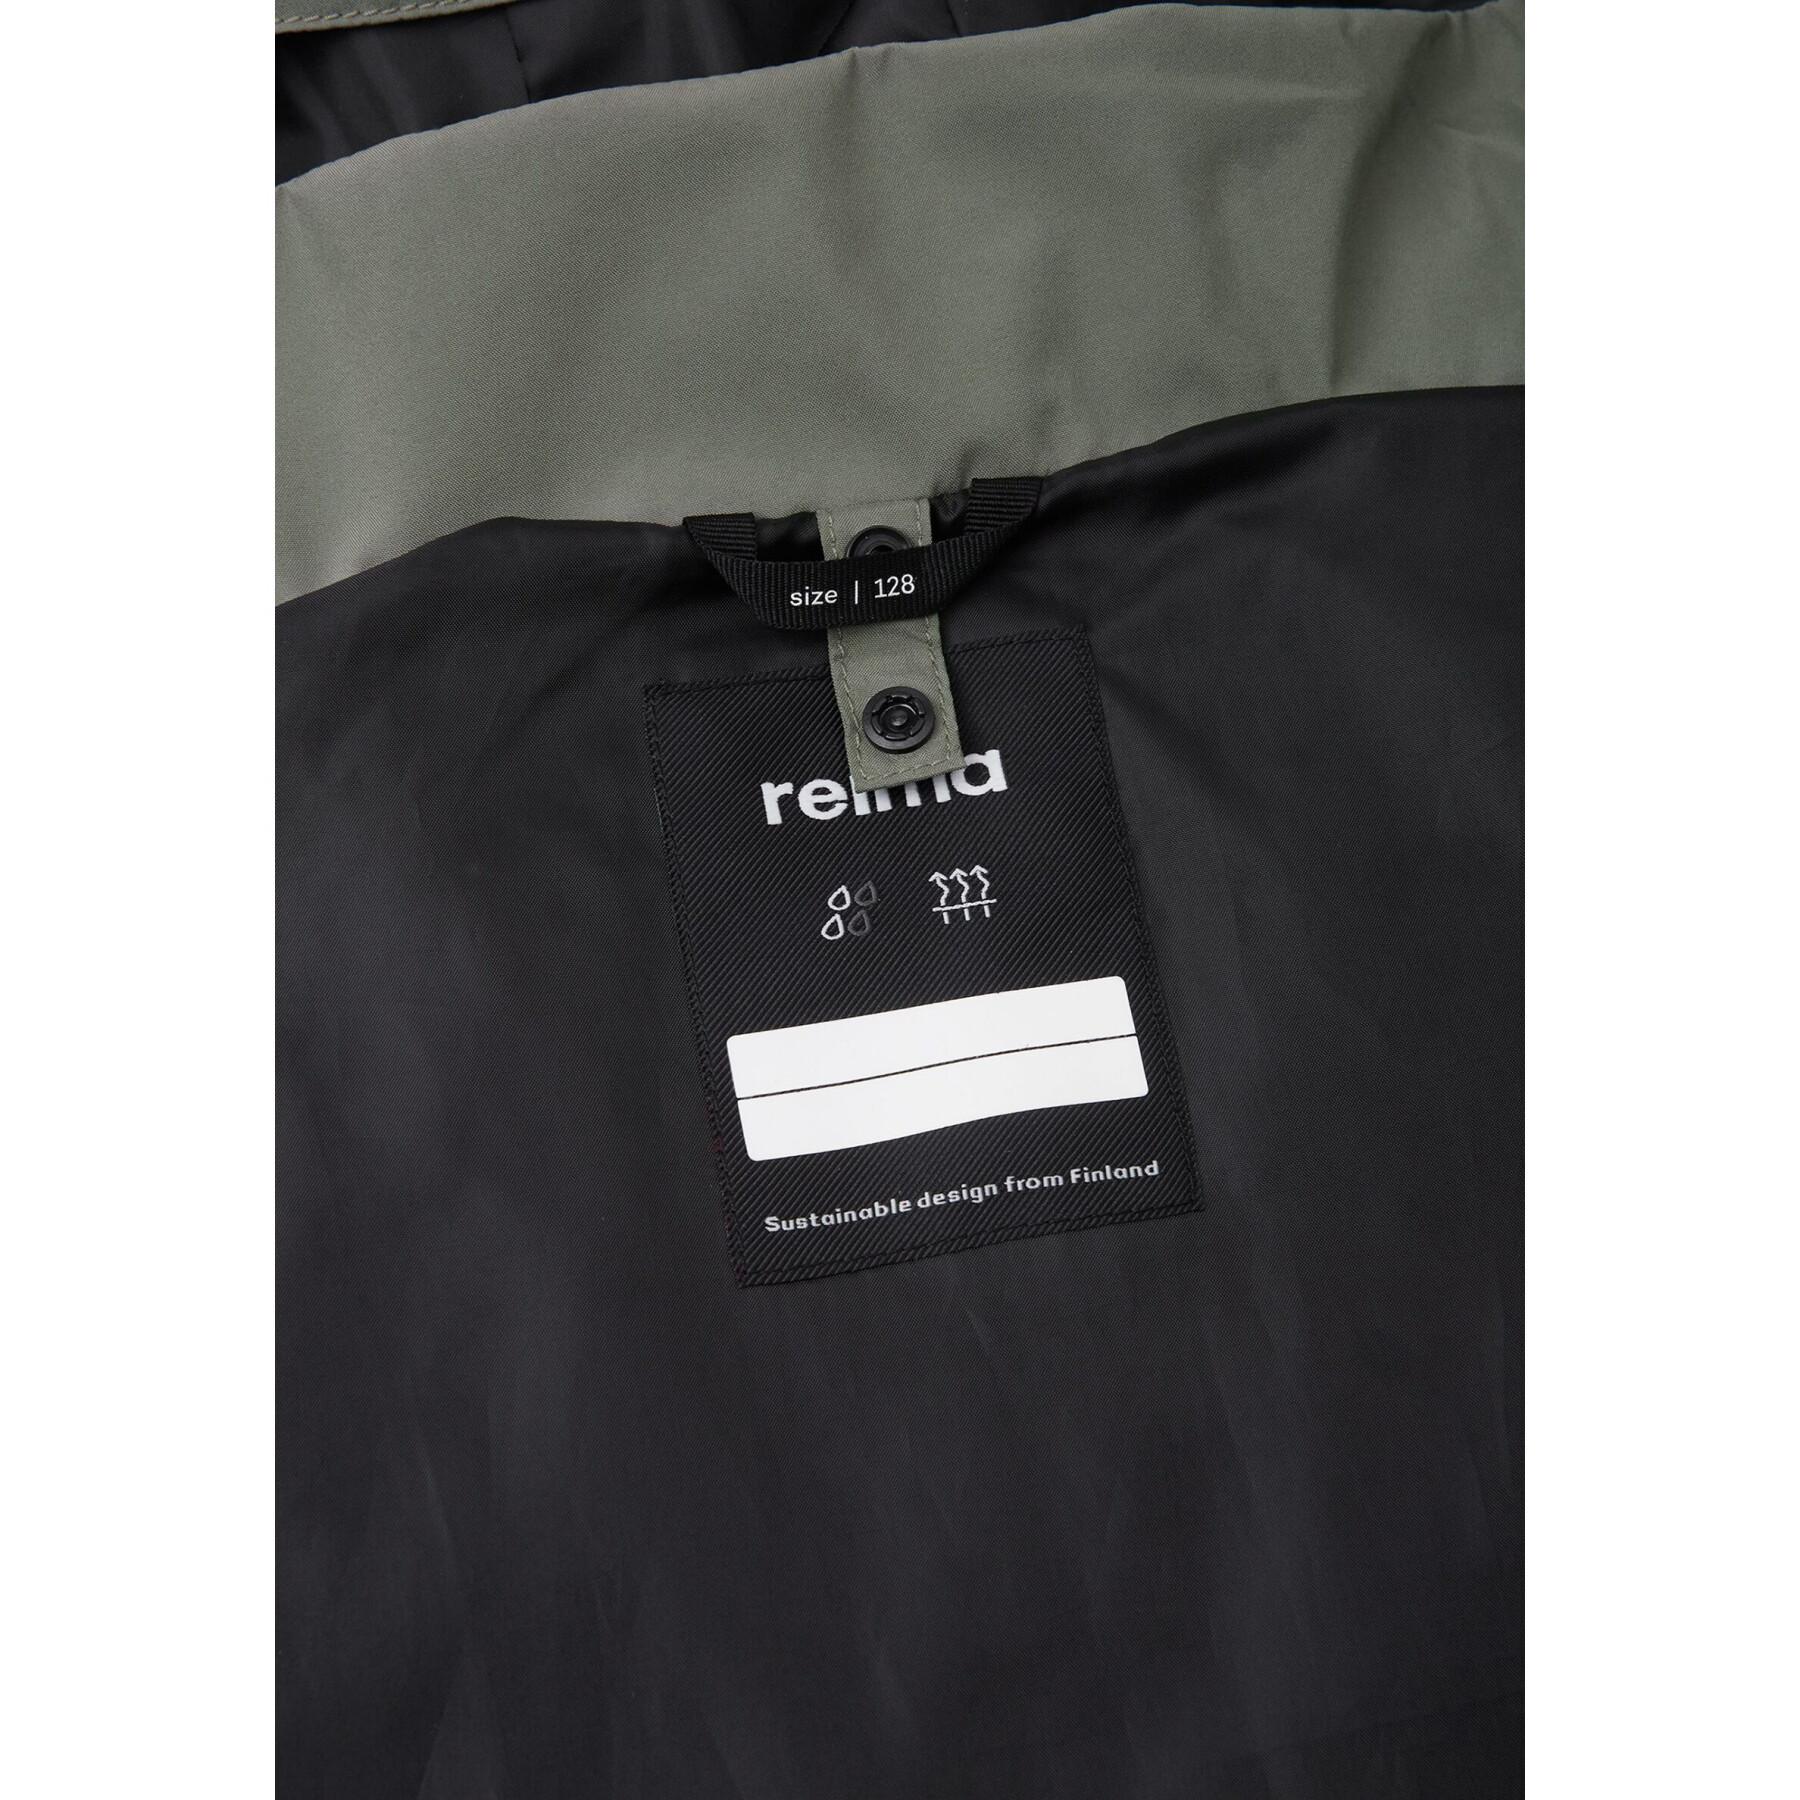 Waterproof jacket for children Reima Reima tec Seiskari